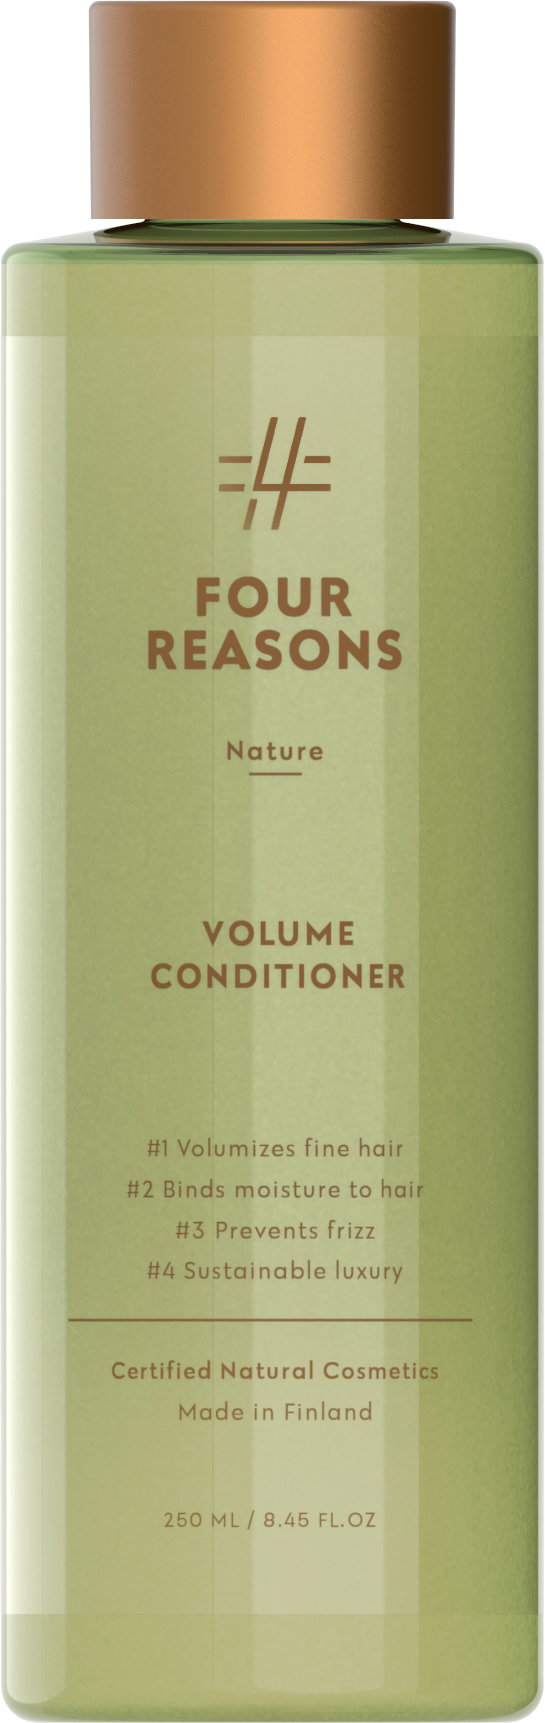 Four reasons шампунь. Four reasons шампунь купить. Volume Shampoo отзывы. Four reasons nature Volume Conditioner 250ml штрихкод на упаковке. Natural volume